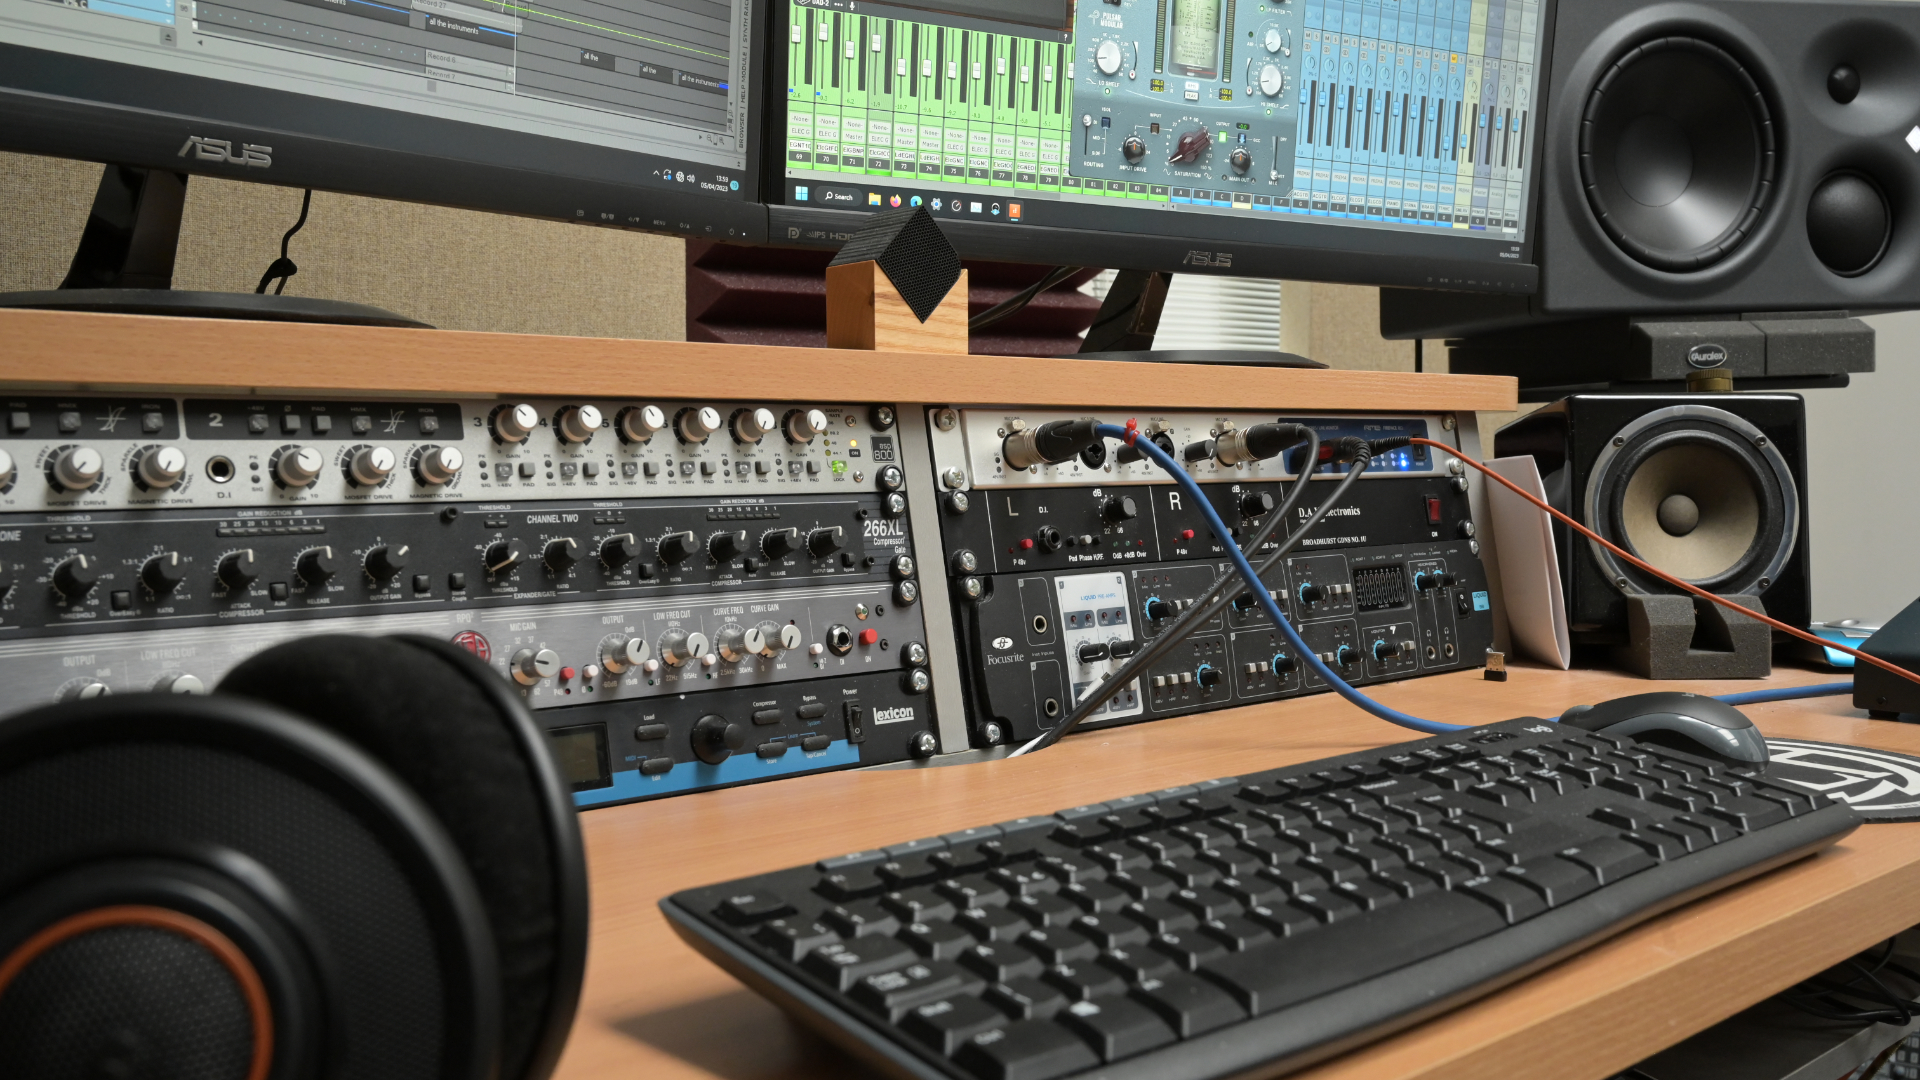 Nicolsound Recording Studio in Ayrshire The Hub. Main desk view.